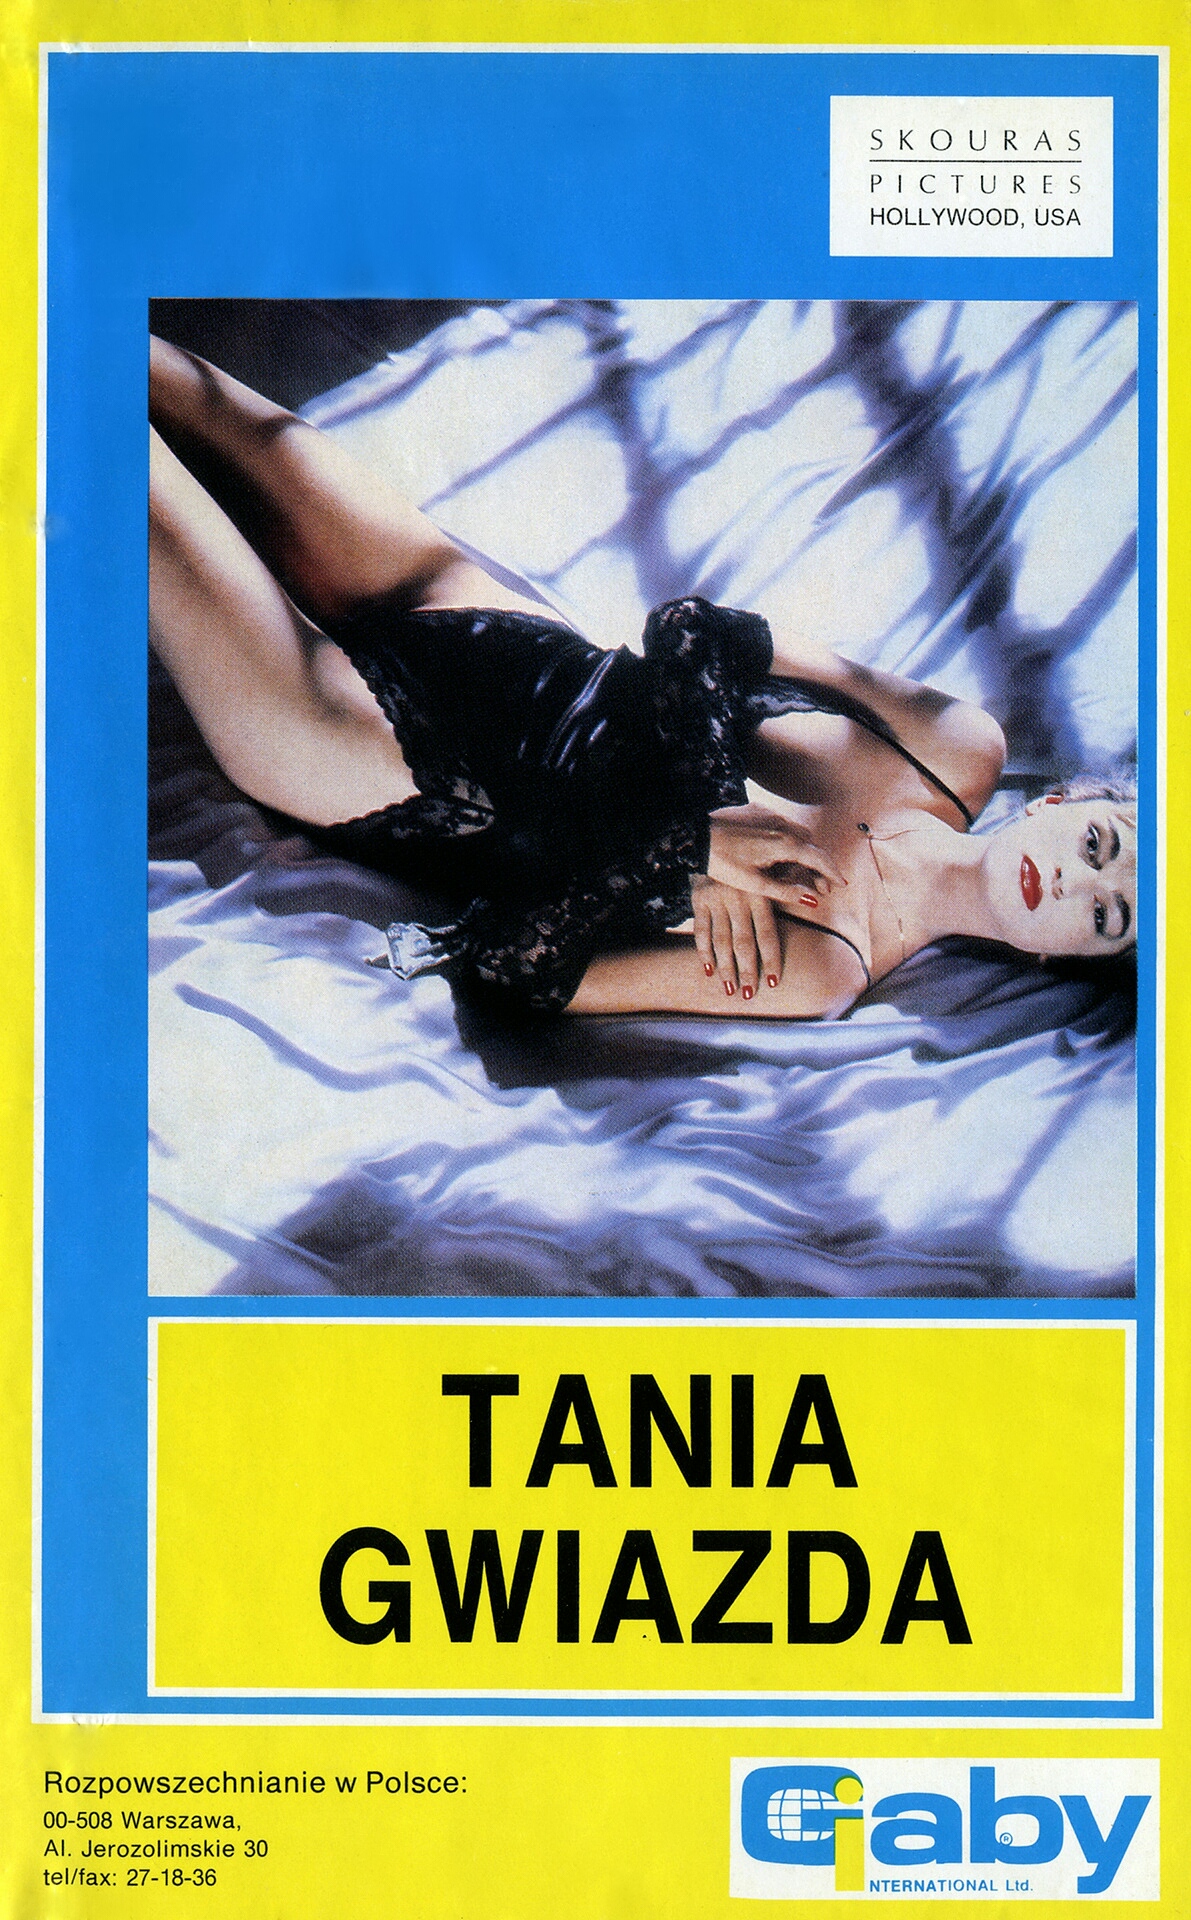 Twenty Dollar Star (1990) Screenshot 1 